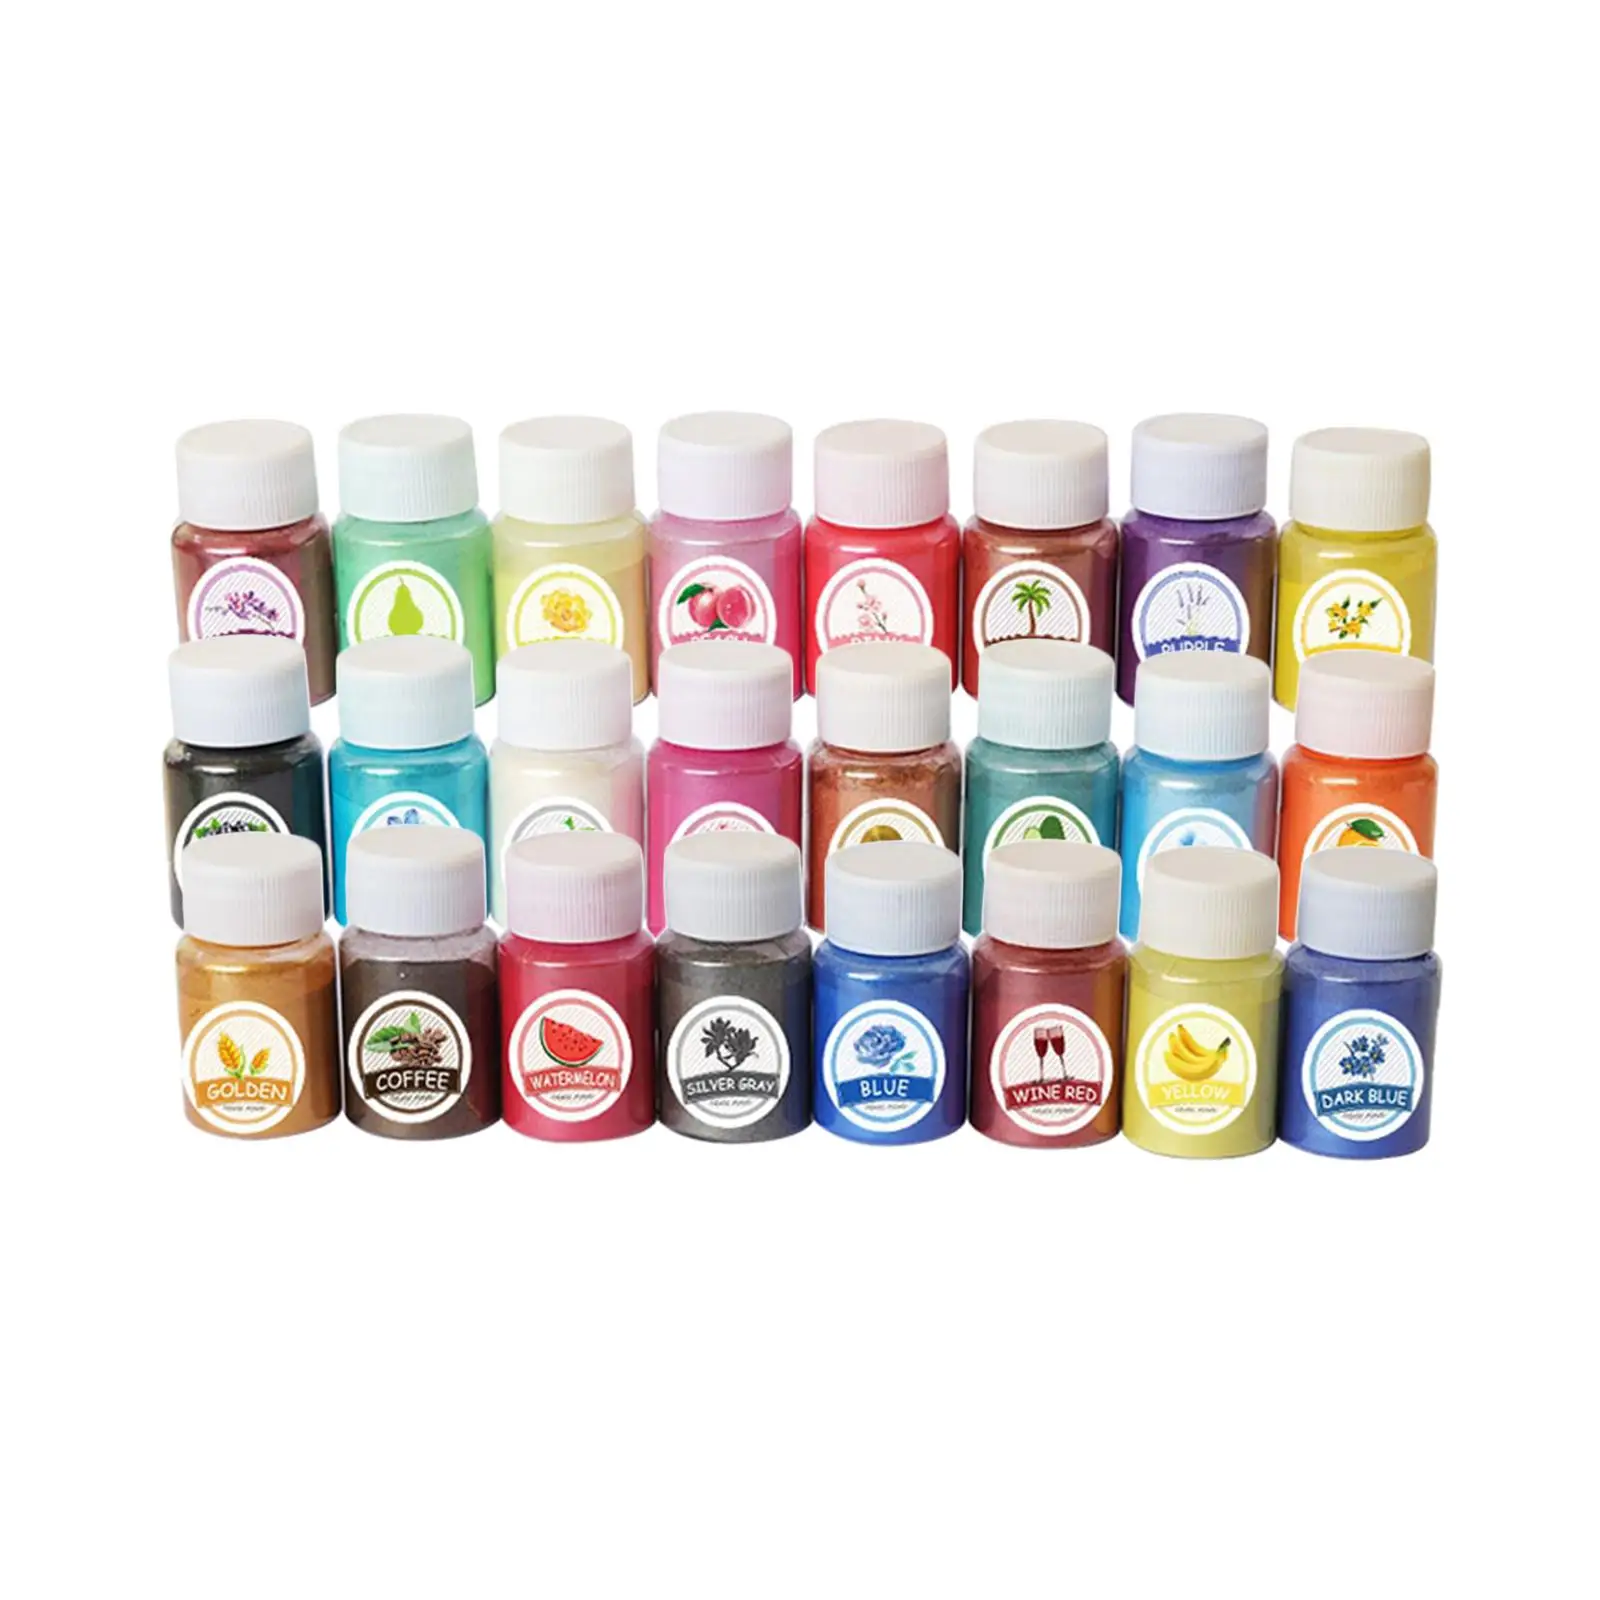 Mica Powder Micas Colorants Art Crafts Pigment for Soap Making Dye Paints